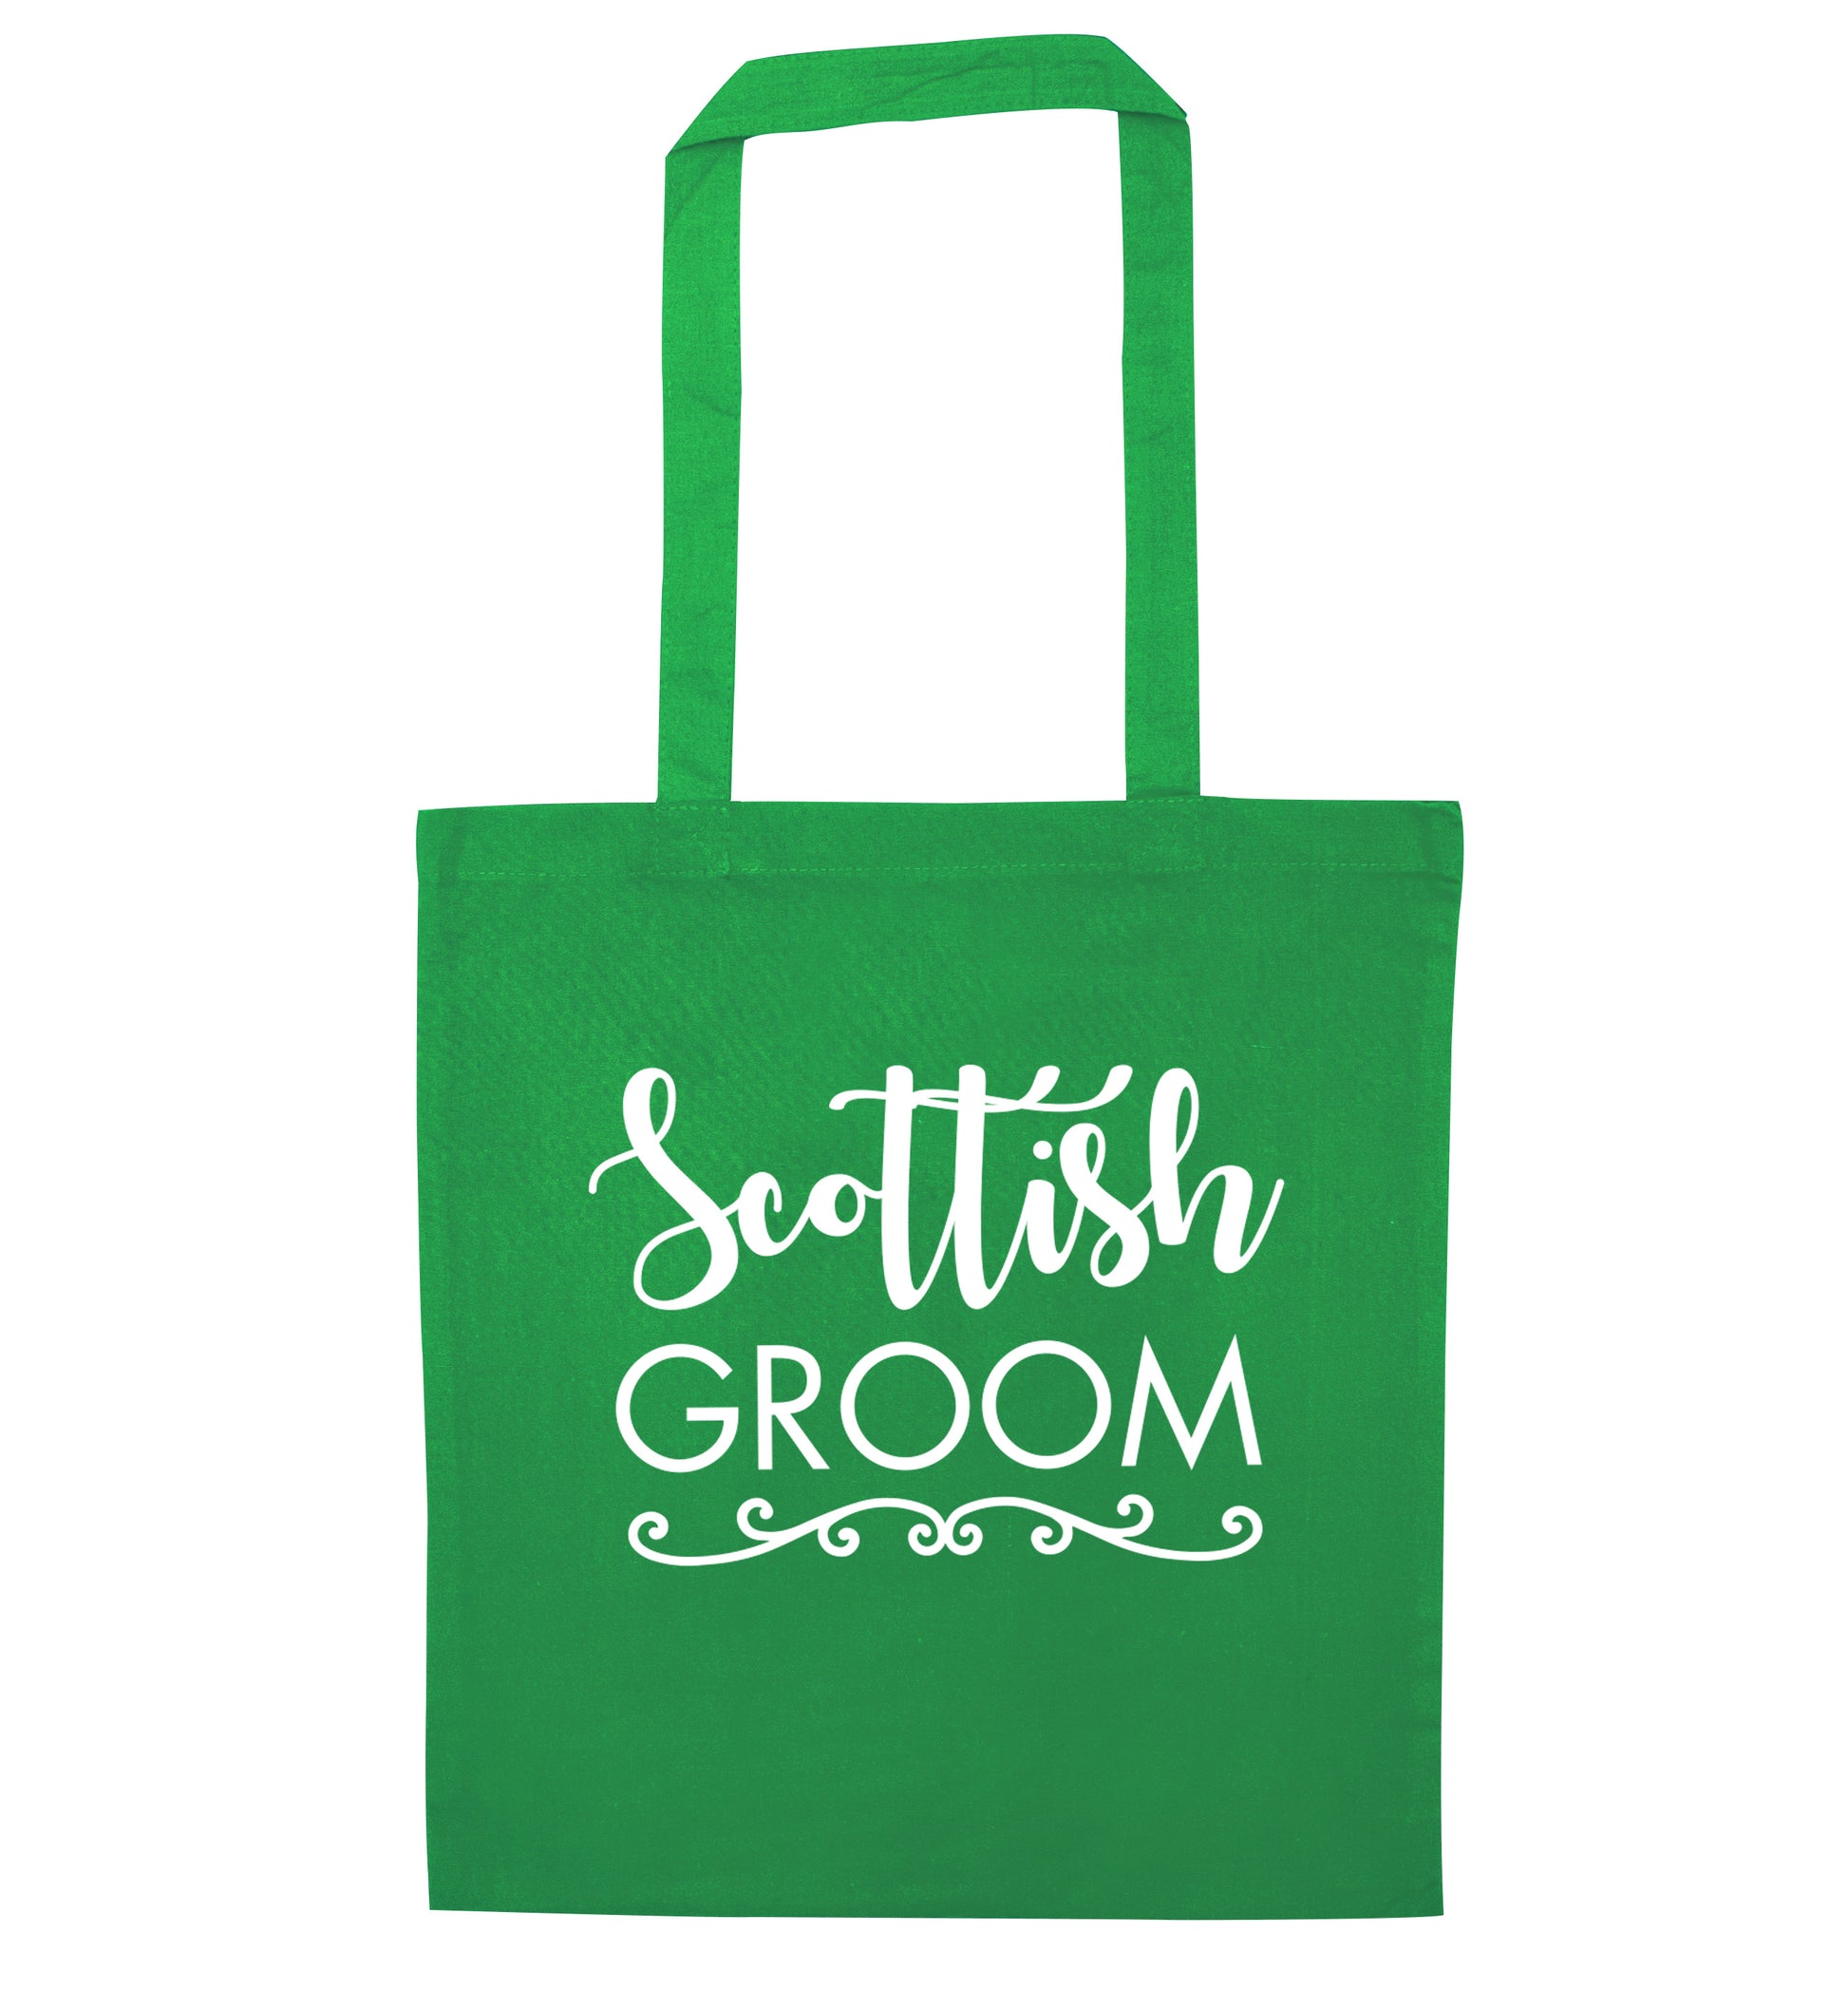 Scottish groom green tote bag